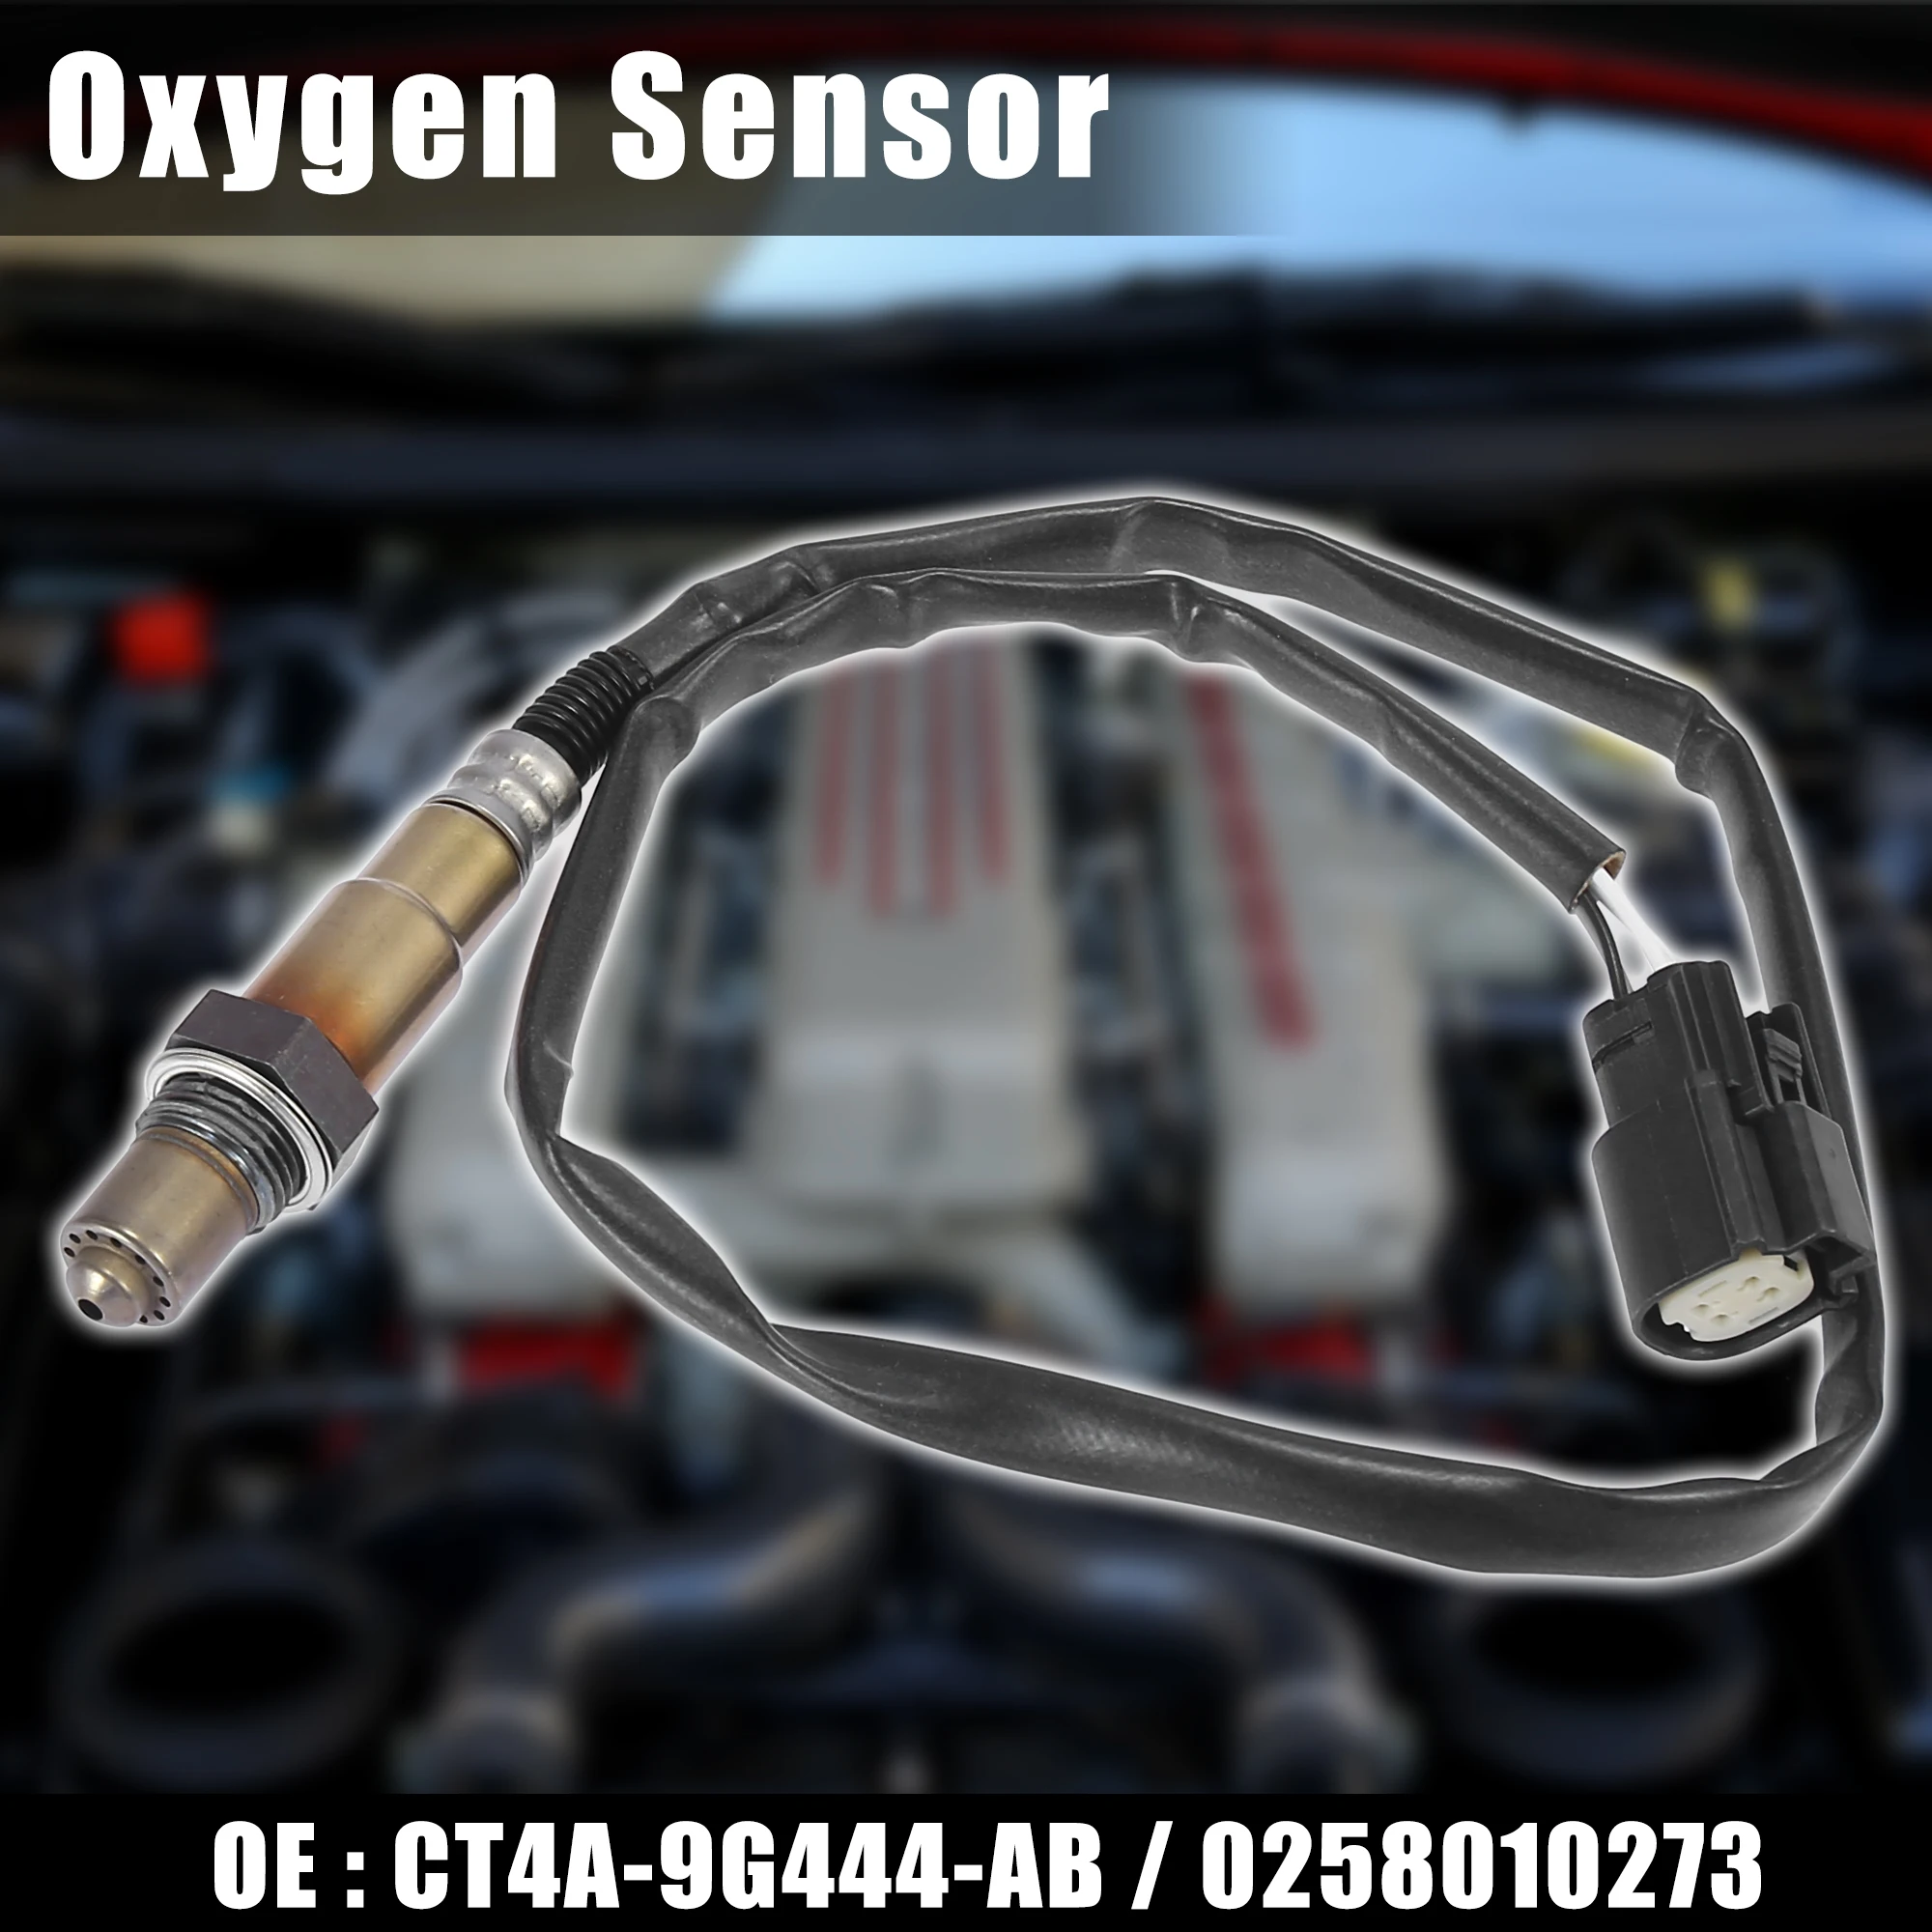 

X Autohaux Auto Lambda Oxygen Sensor CT4A-9G444-AB/0258010273 for Ford Edge 2015 Car Accessories Wideband Exhaust Gas O2 Sensors